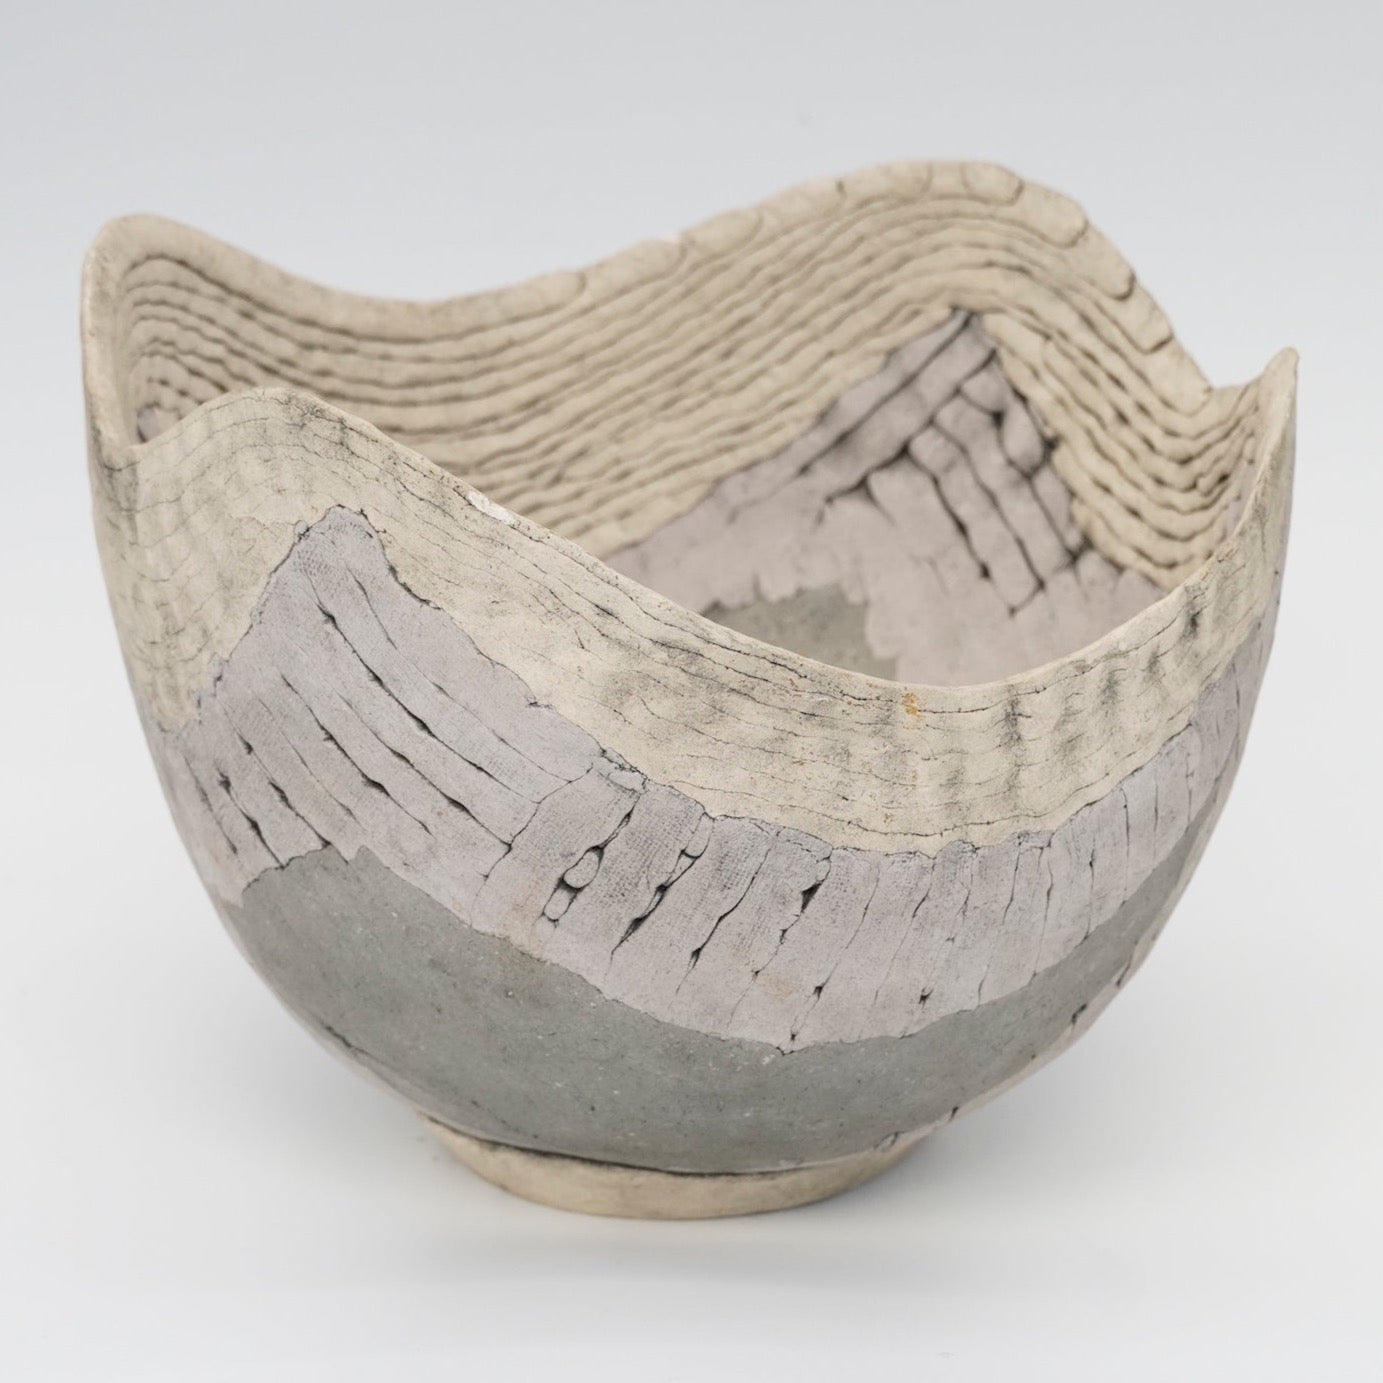 Vintage woven ceramic one of kind decorative bowl